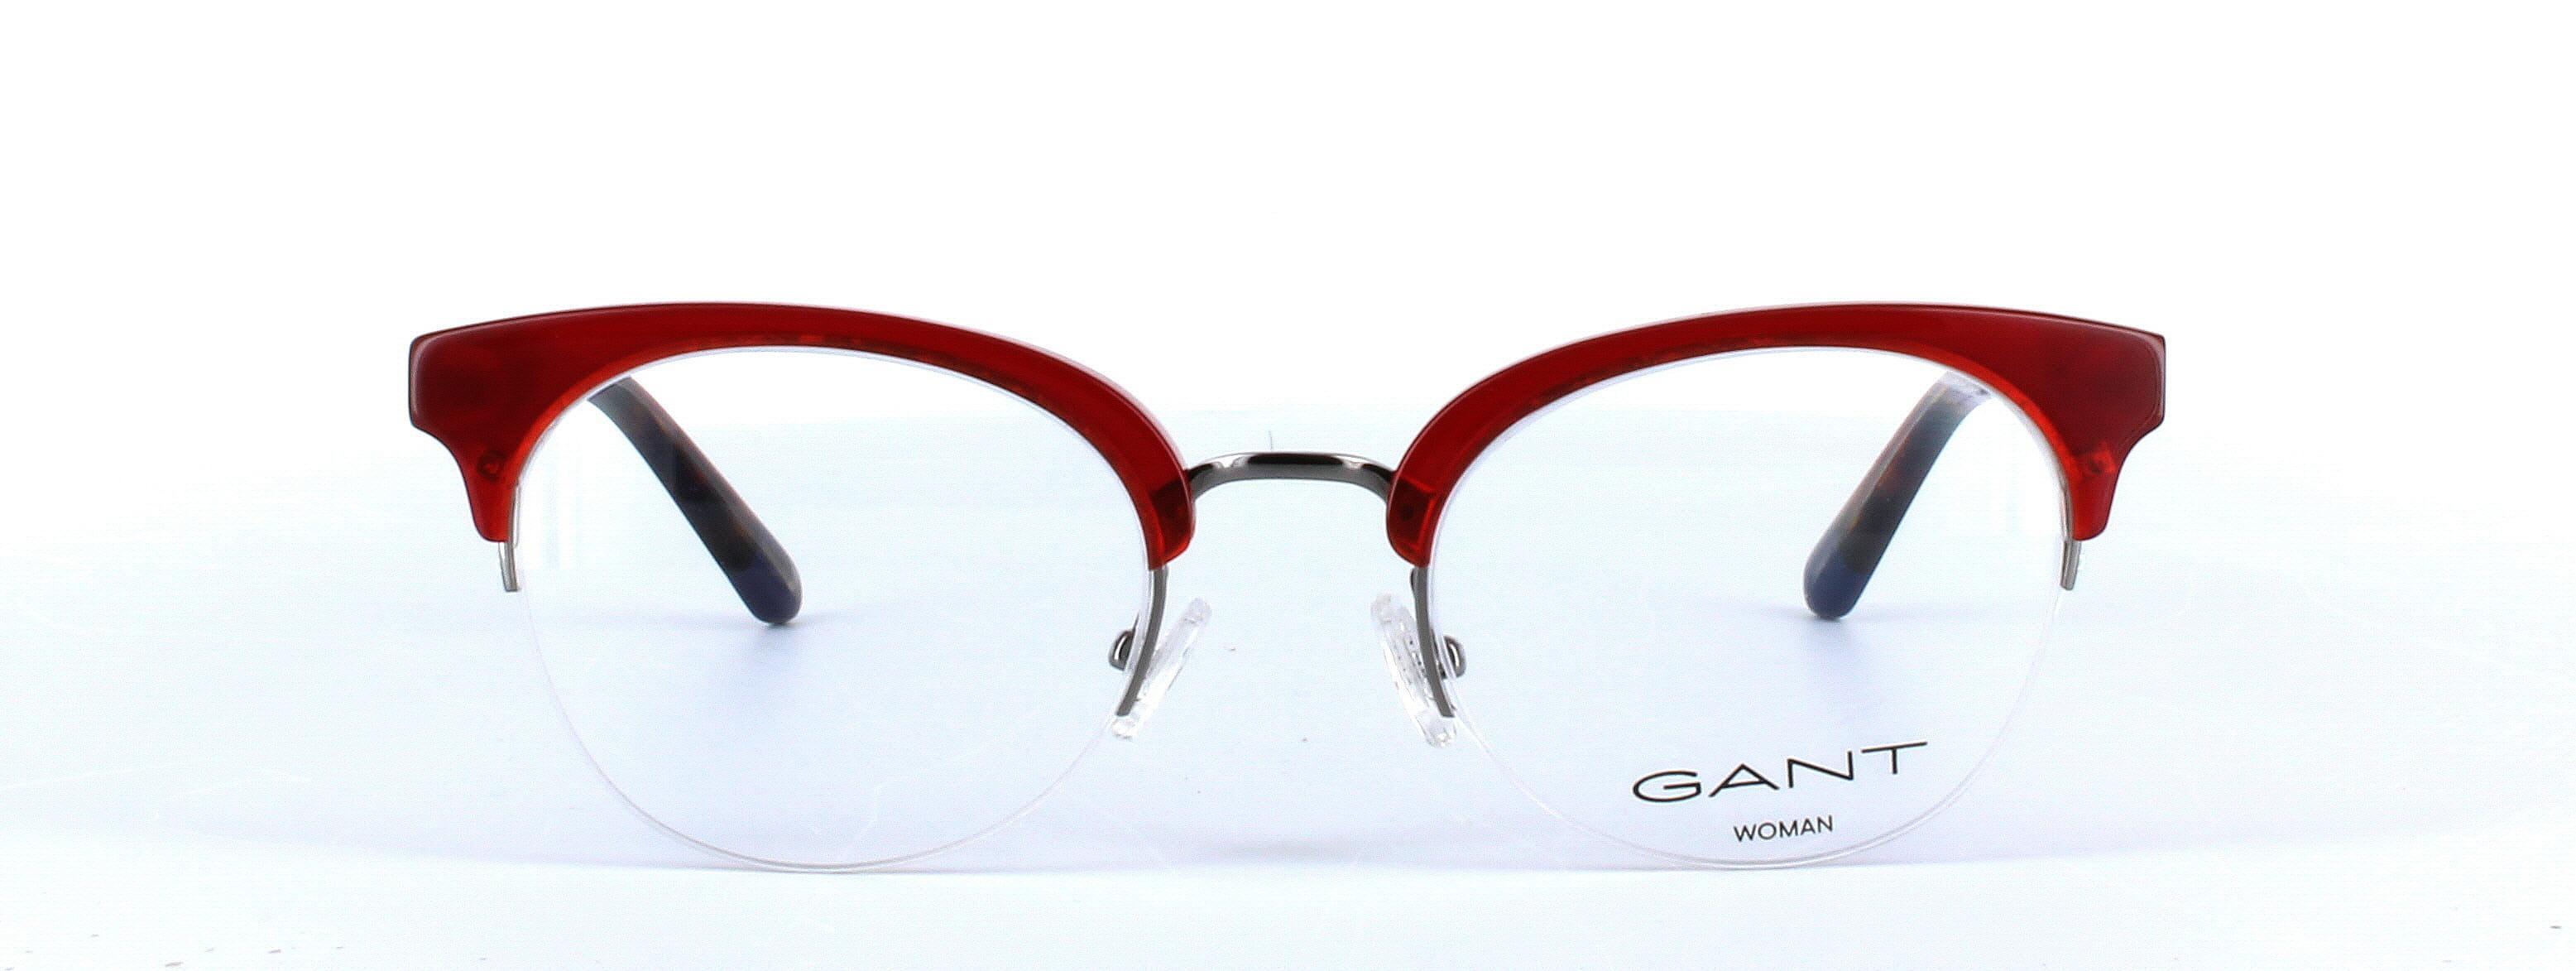 GANT (4085-066) Red Semi Rimless Round Acetate Glasses - Image View 5